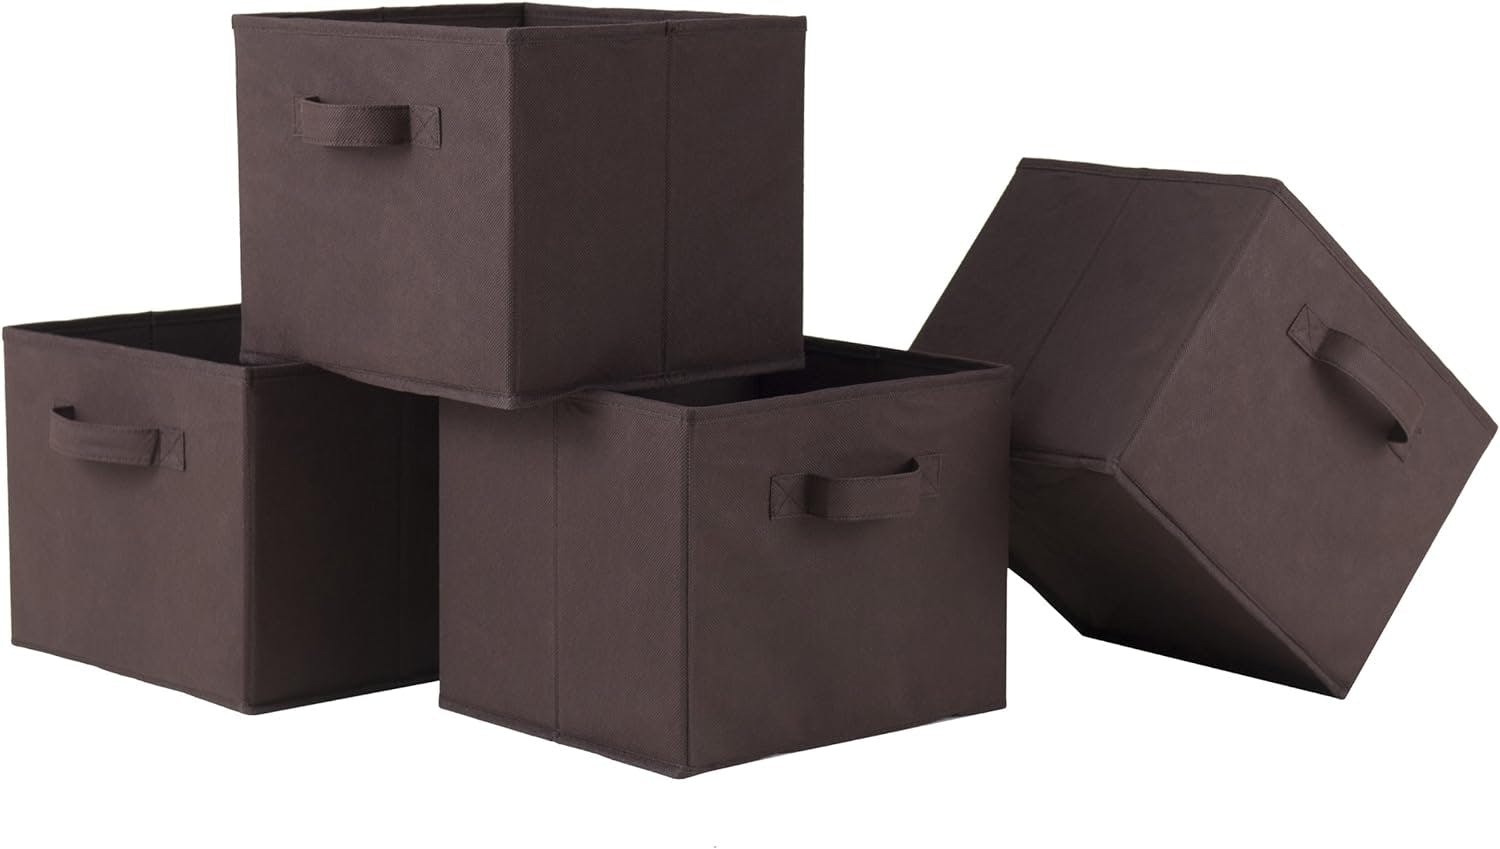 Capri Coastal Foldable Fabric Baskets in Chocolate Brown - Set of 4